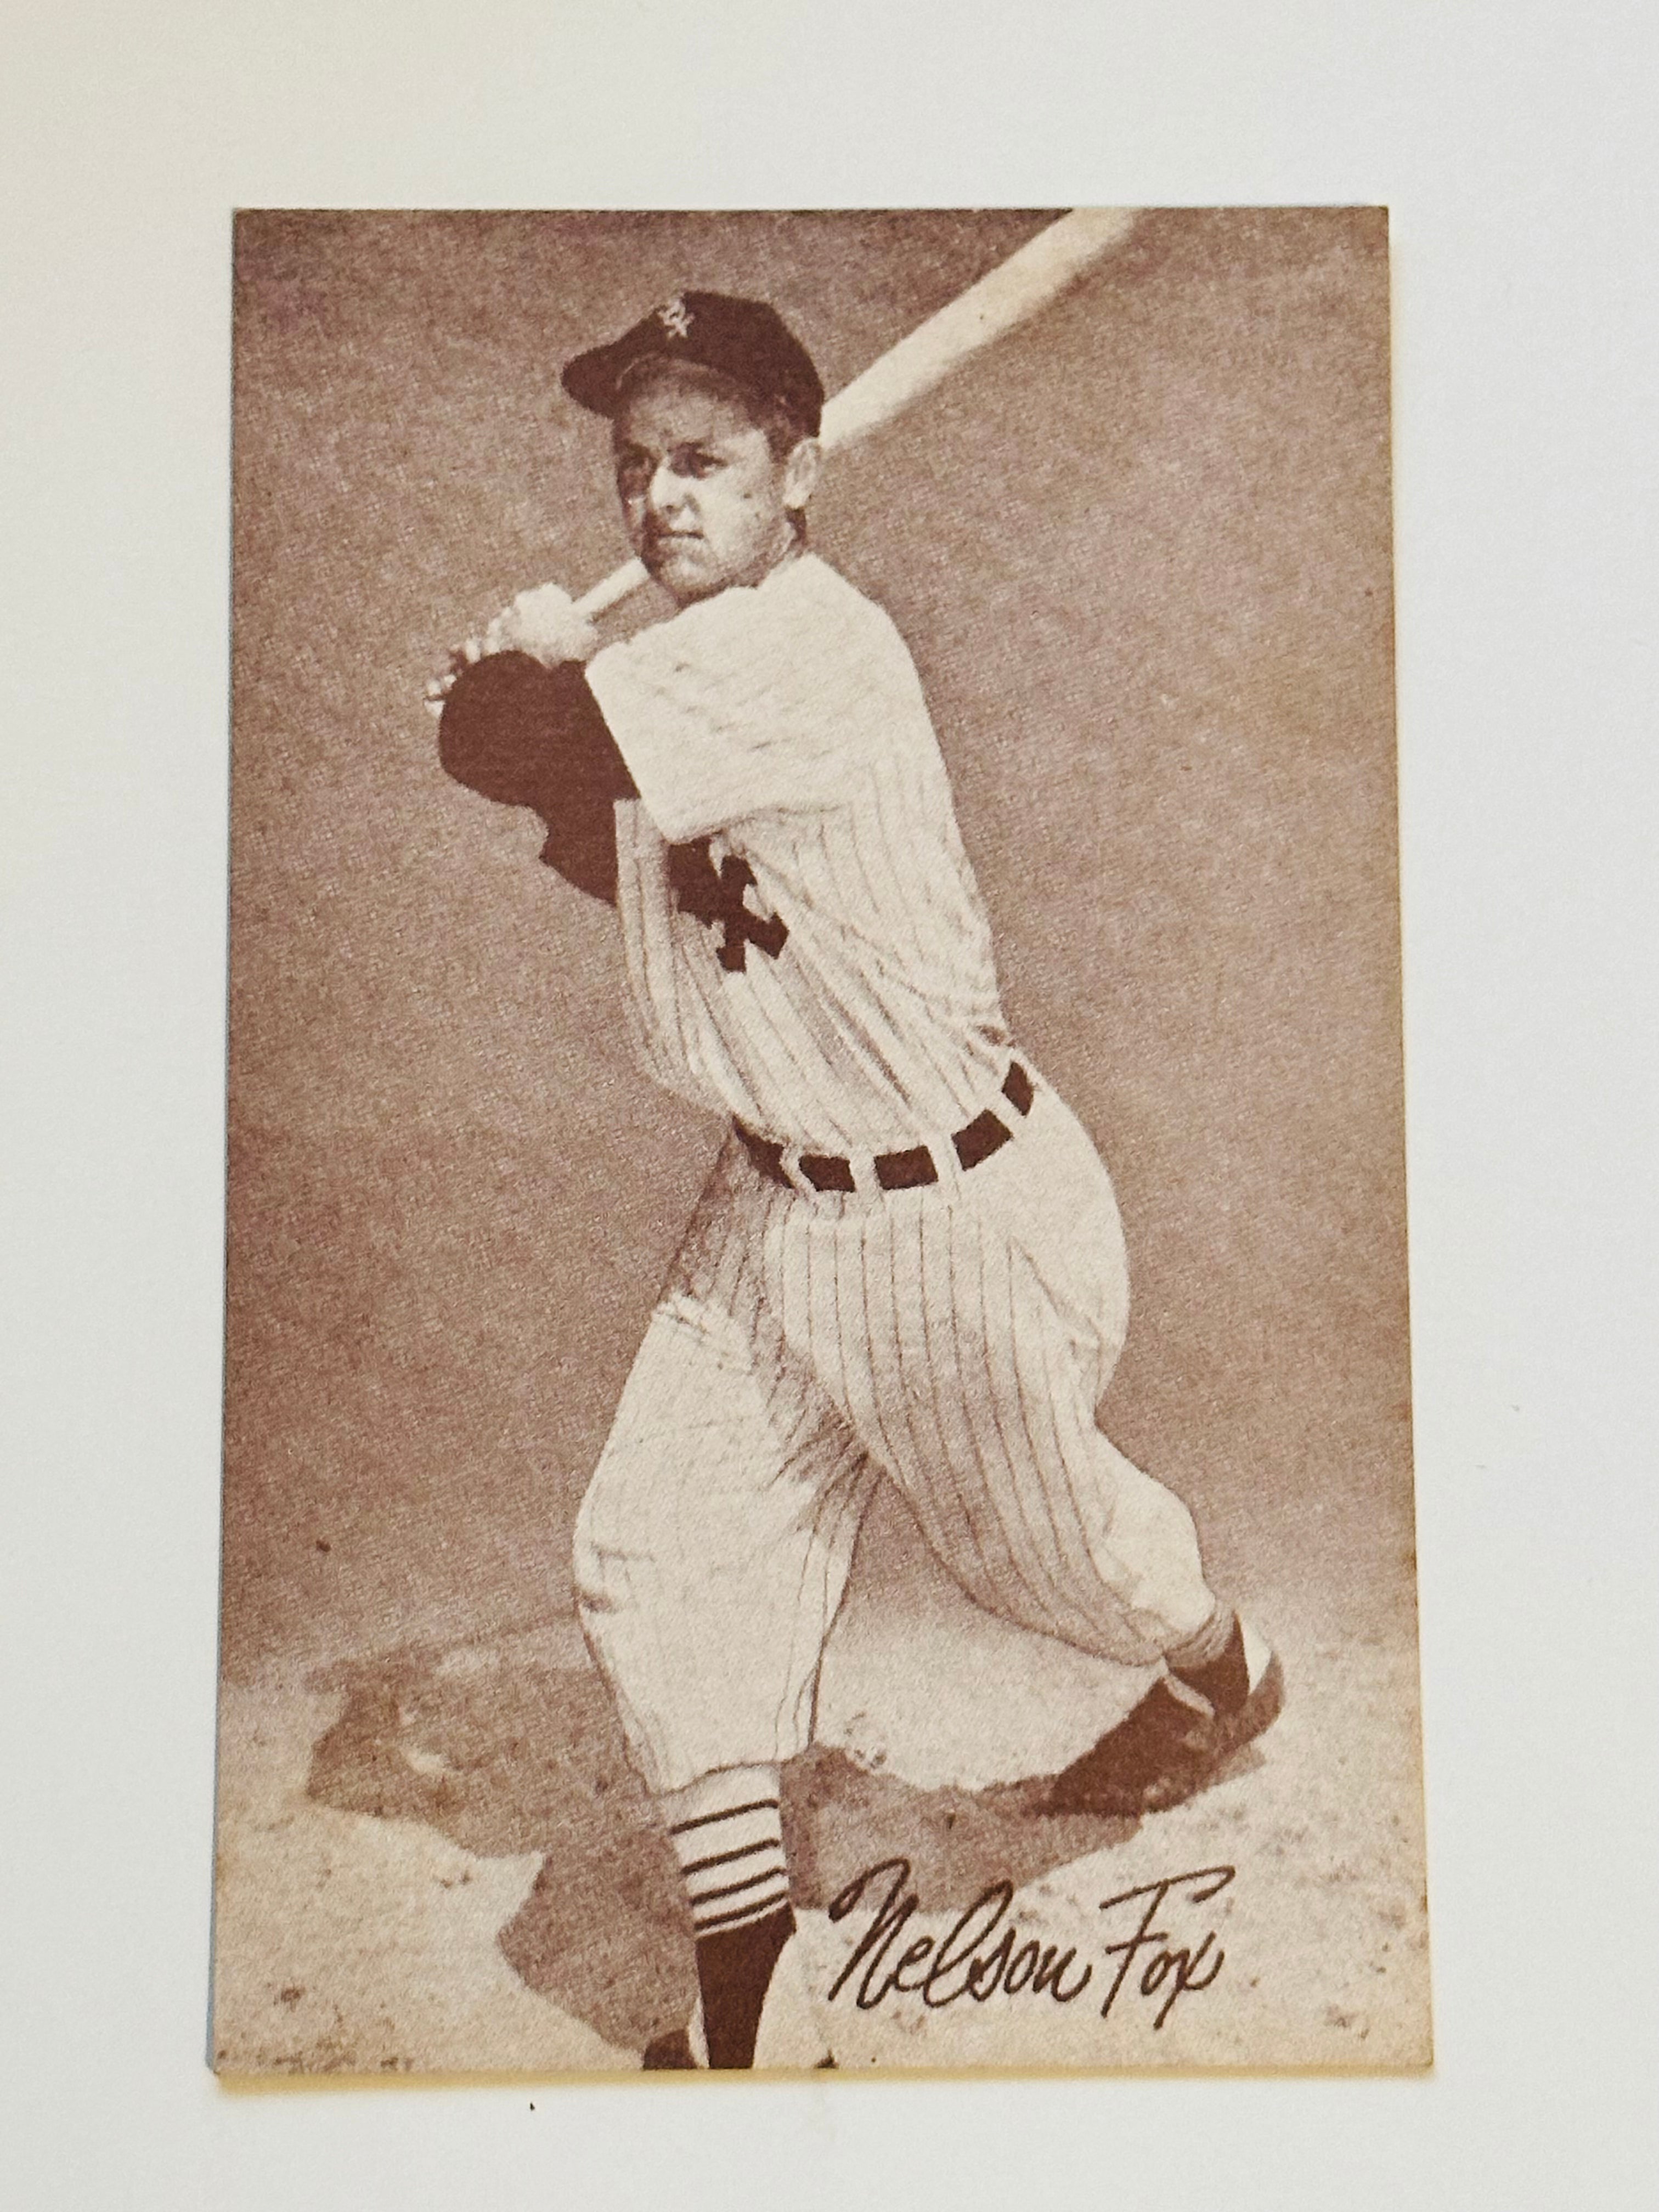 Nellie Fox rare baseball Exhibit card 1947-1966